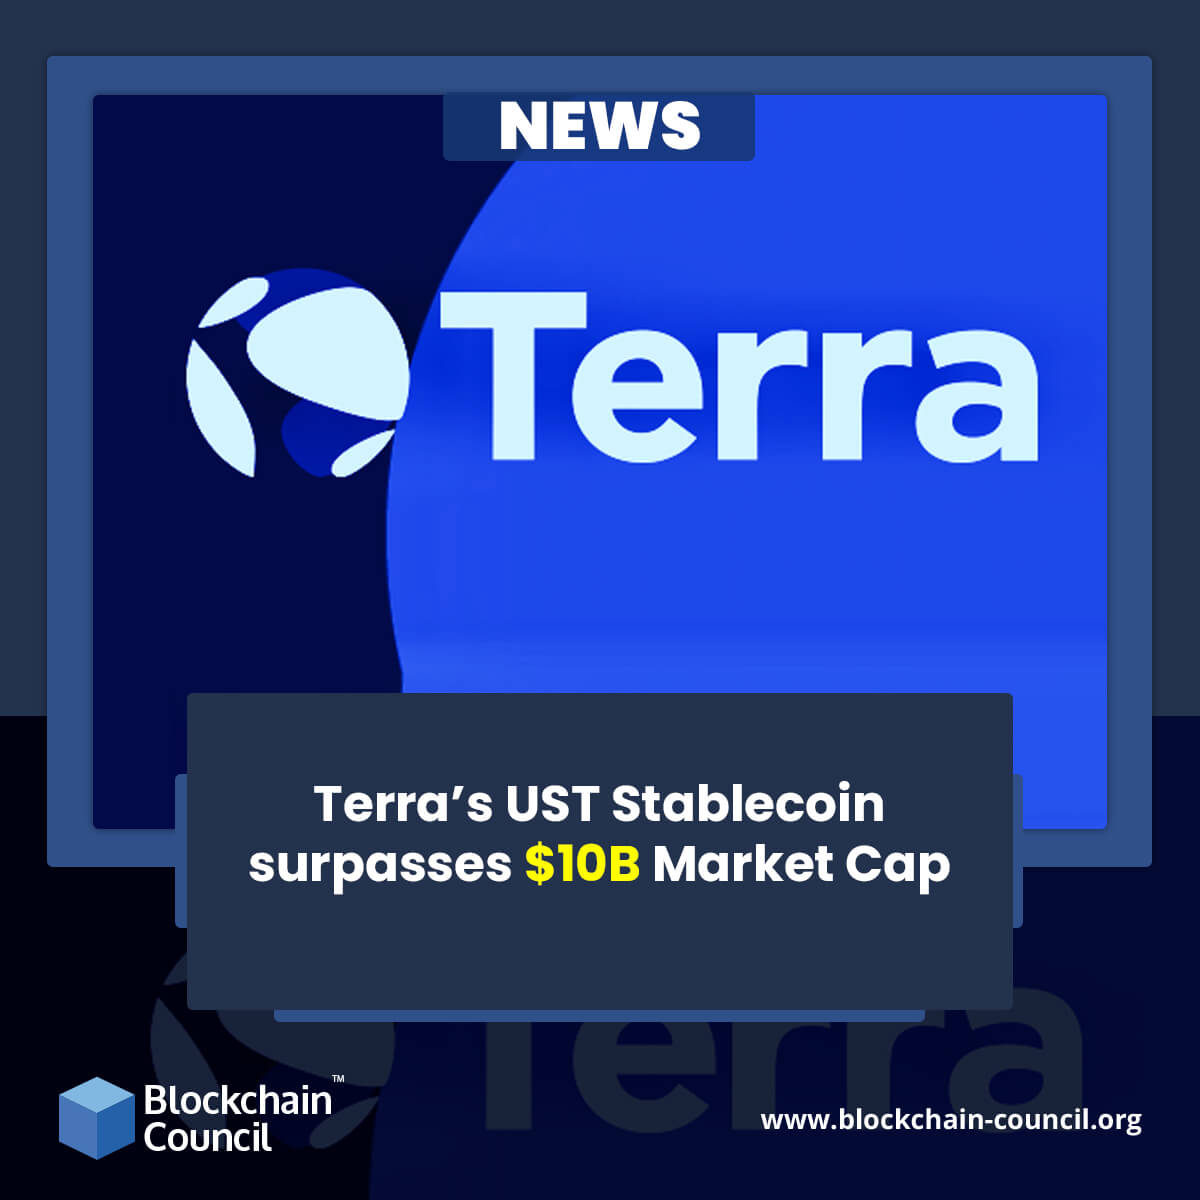 Terra’s UST Stablecoin surpasses $10B Market Cap